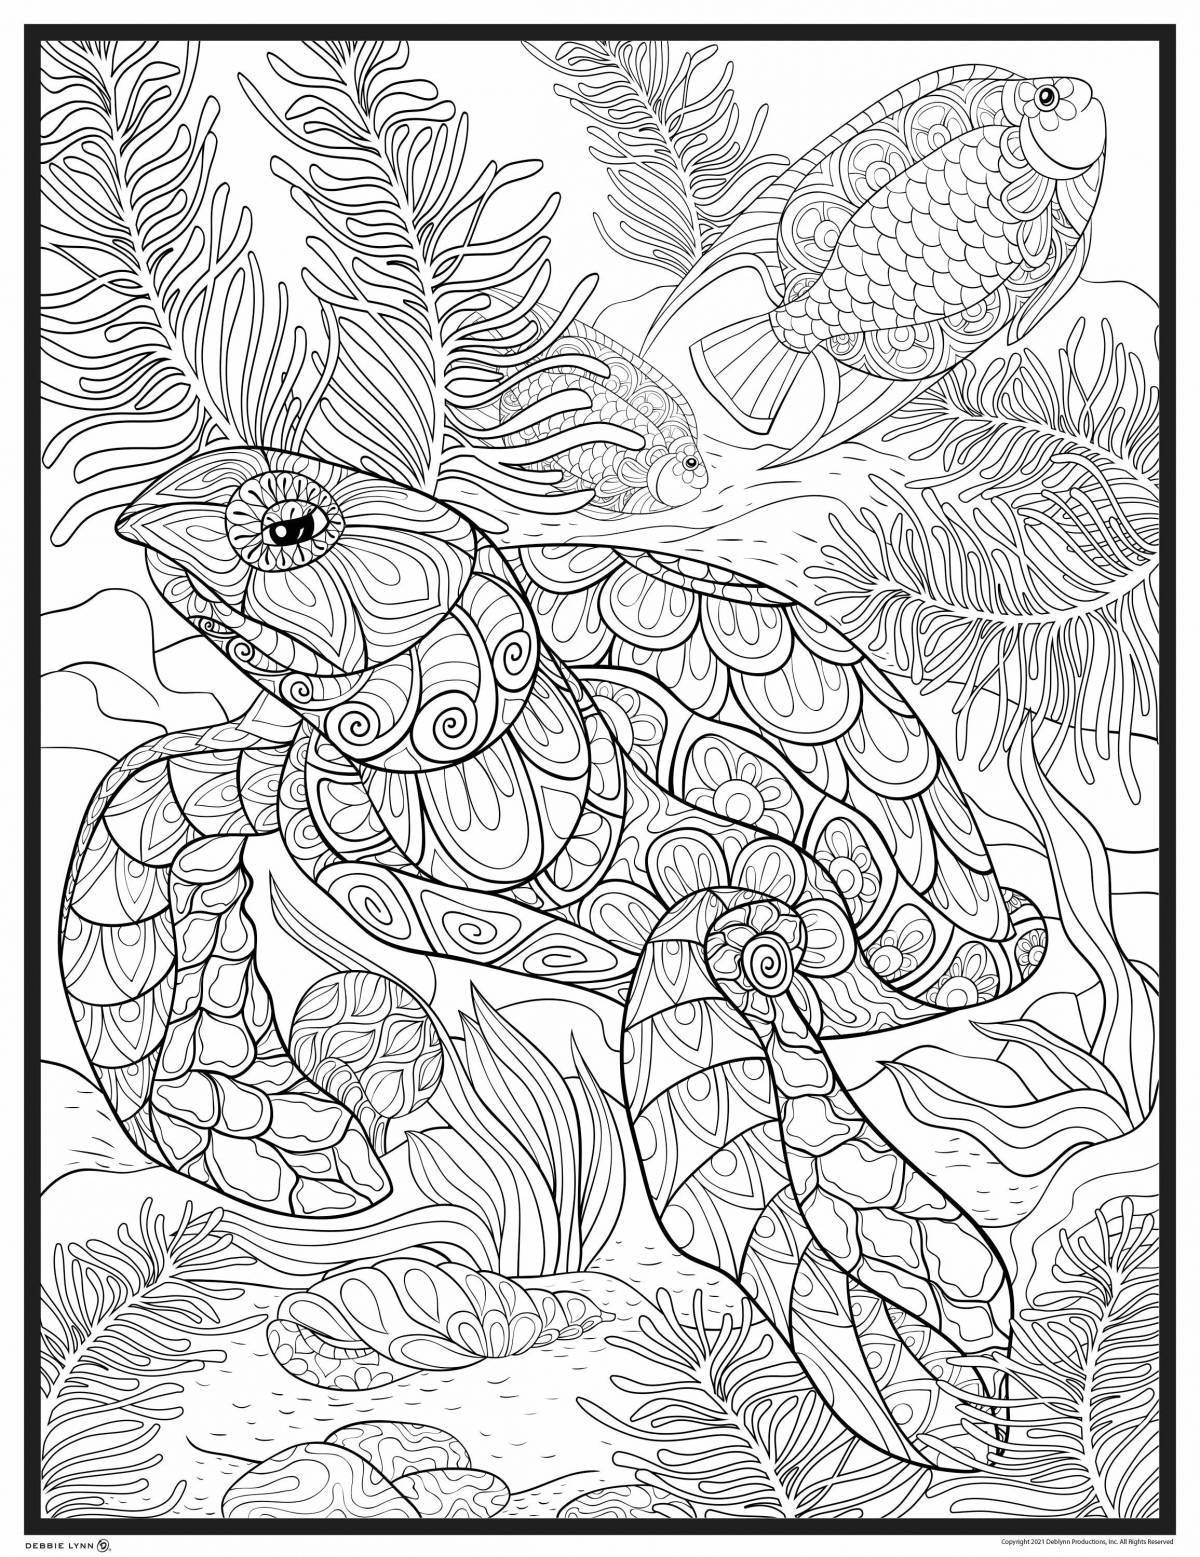 Calming anti-stress turtle coloring book